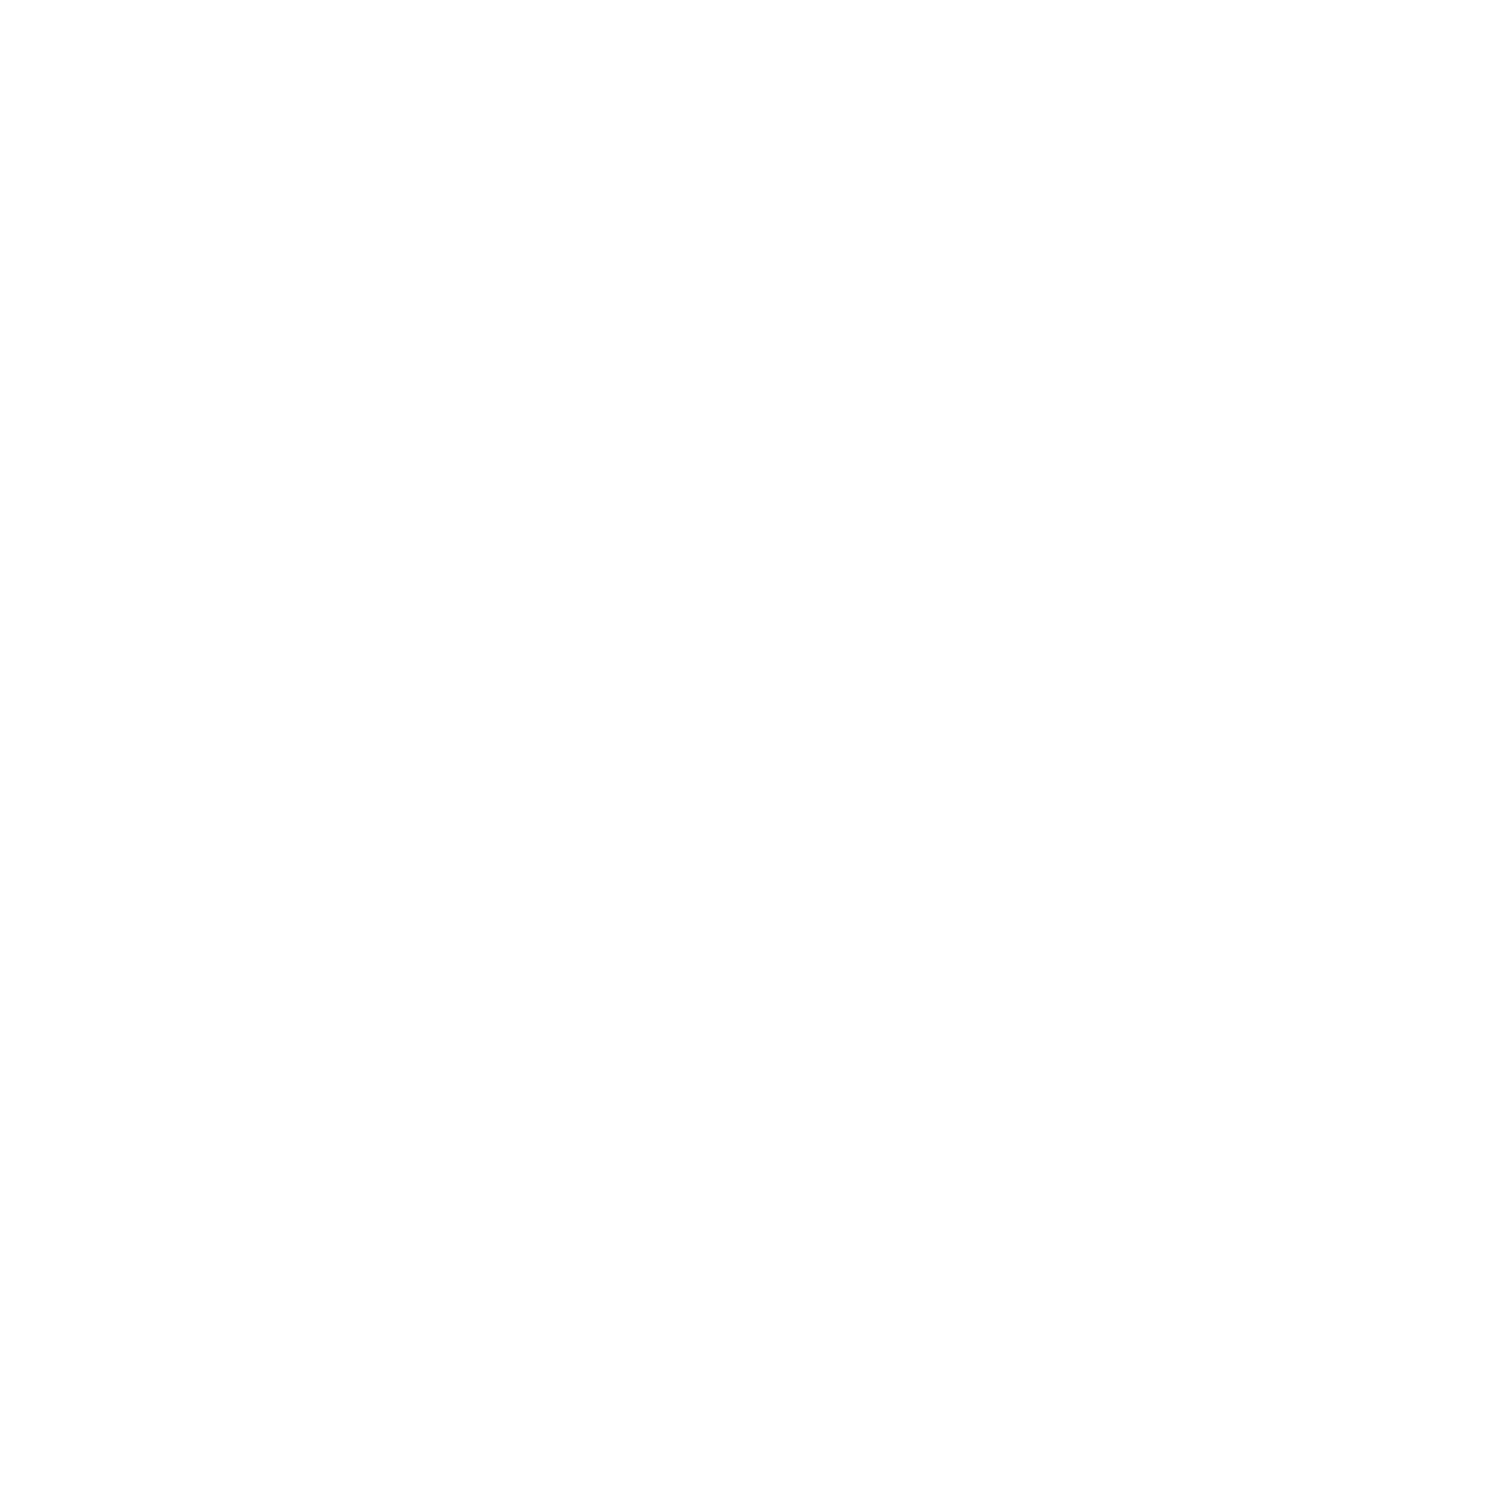 Booneville Gas & Water